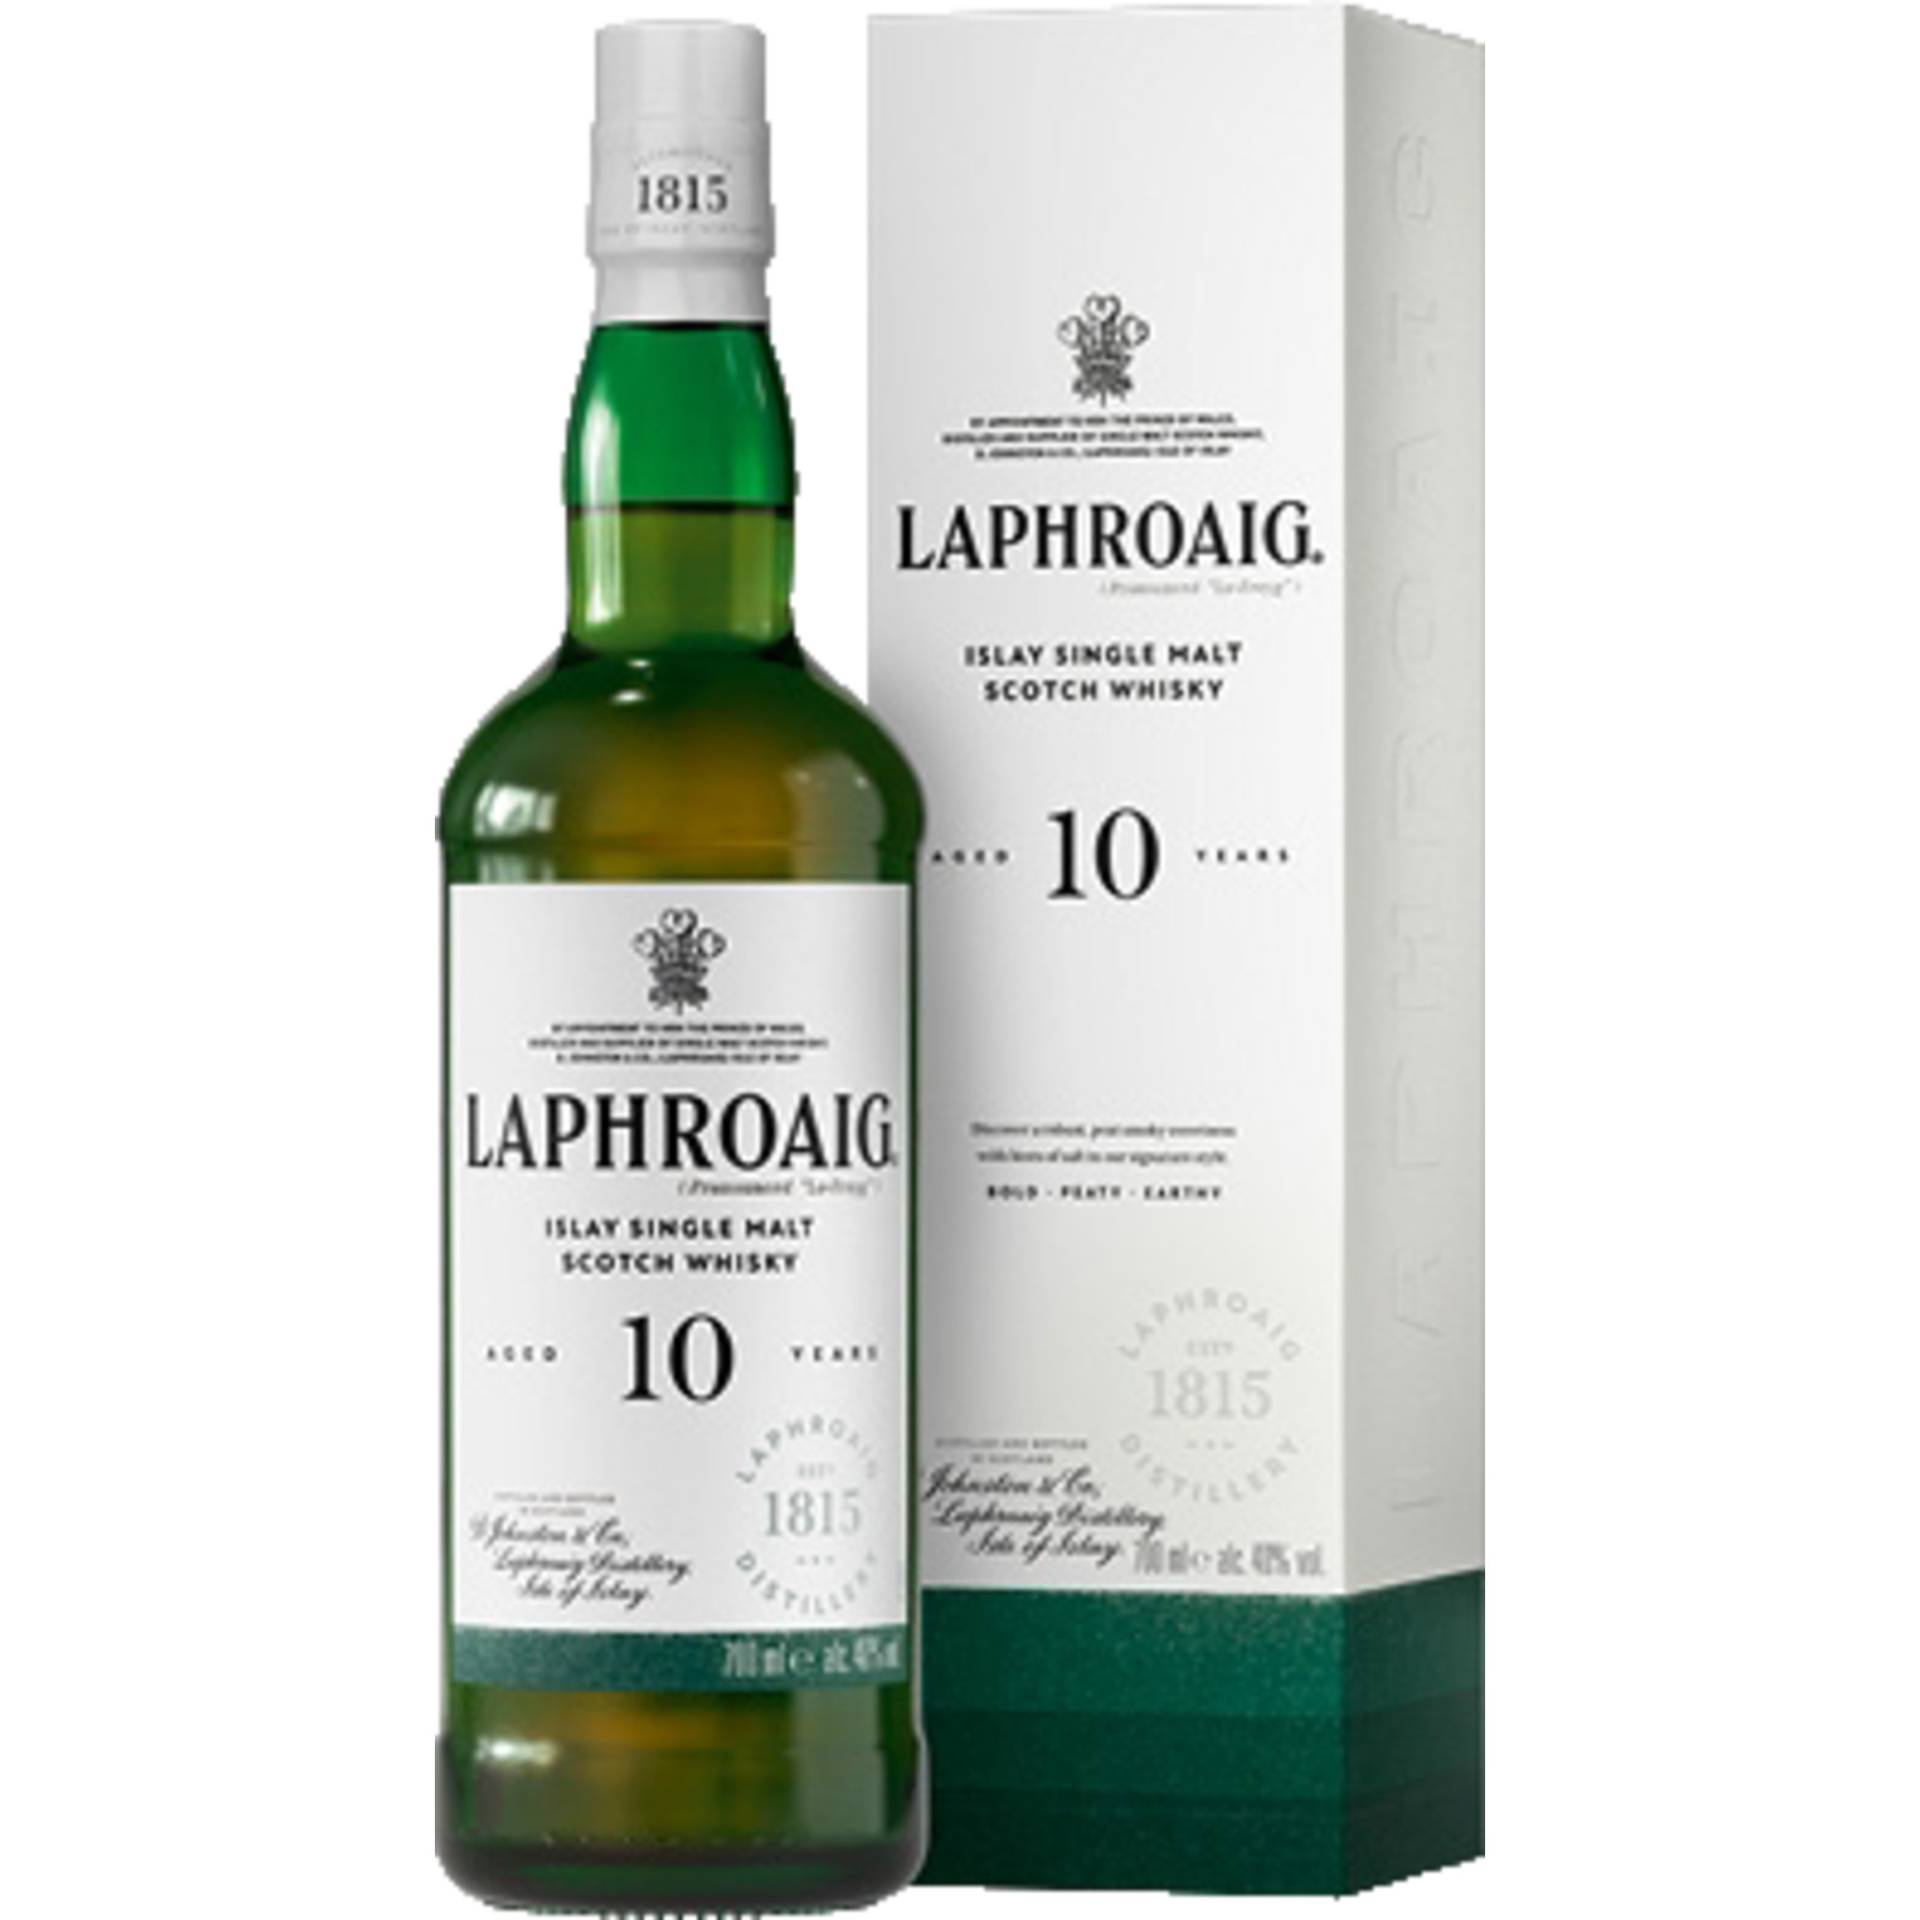 Laphroaig 10 YO Islay Single Malt Scotch Whisky, 40 % vol. 0,7 L, Schottland, Spirituosen von D. Johnston & Company (Laphroaig) Ltd, Springburn Bond, Carlisle St, Glasgow G21 1EQ, Scotland